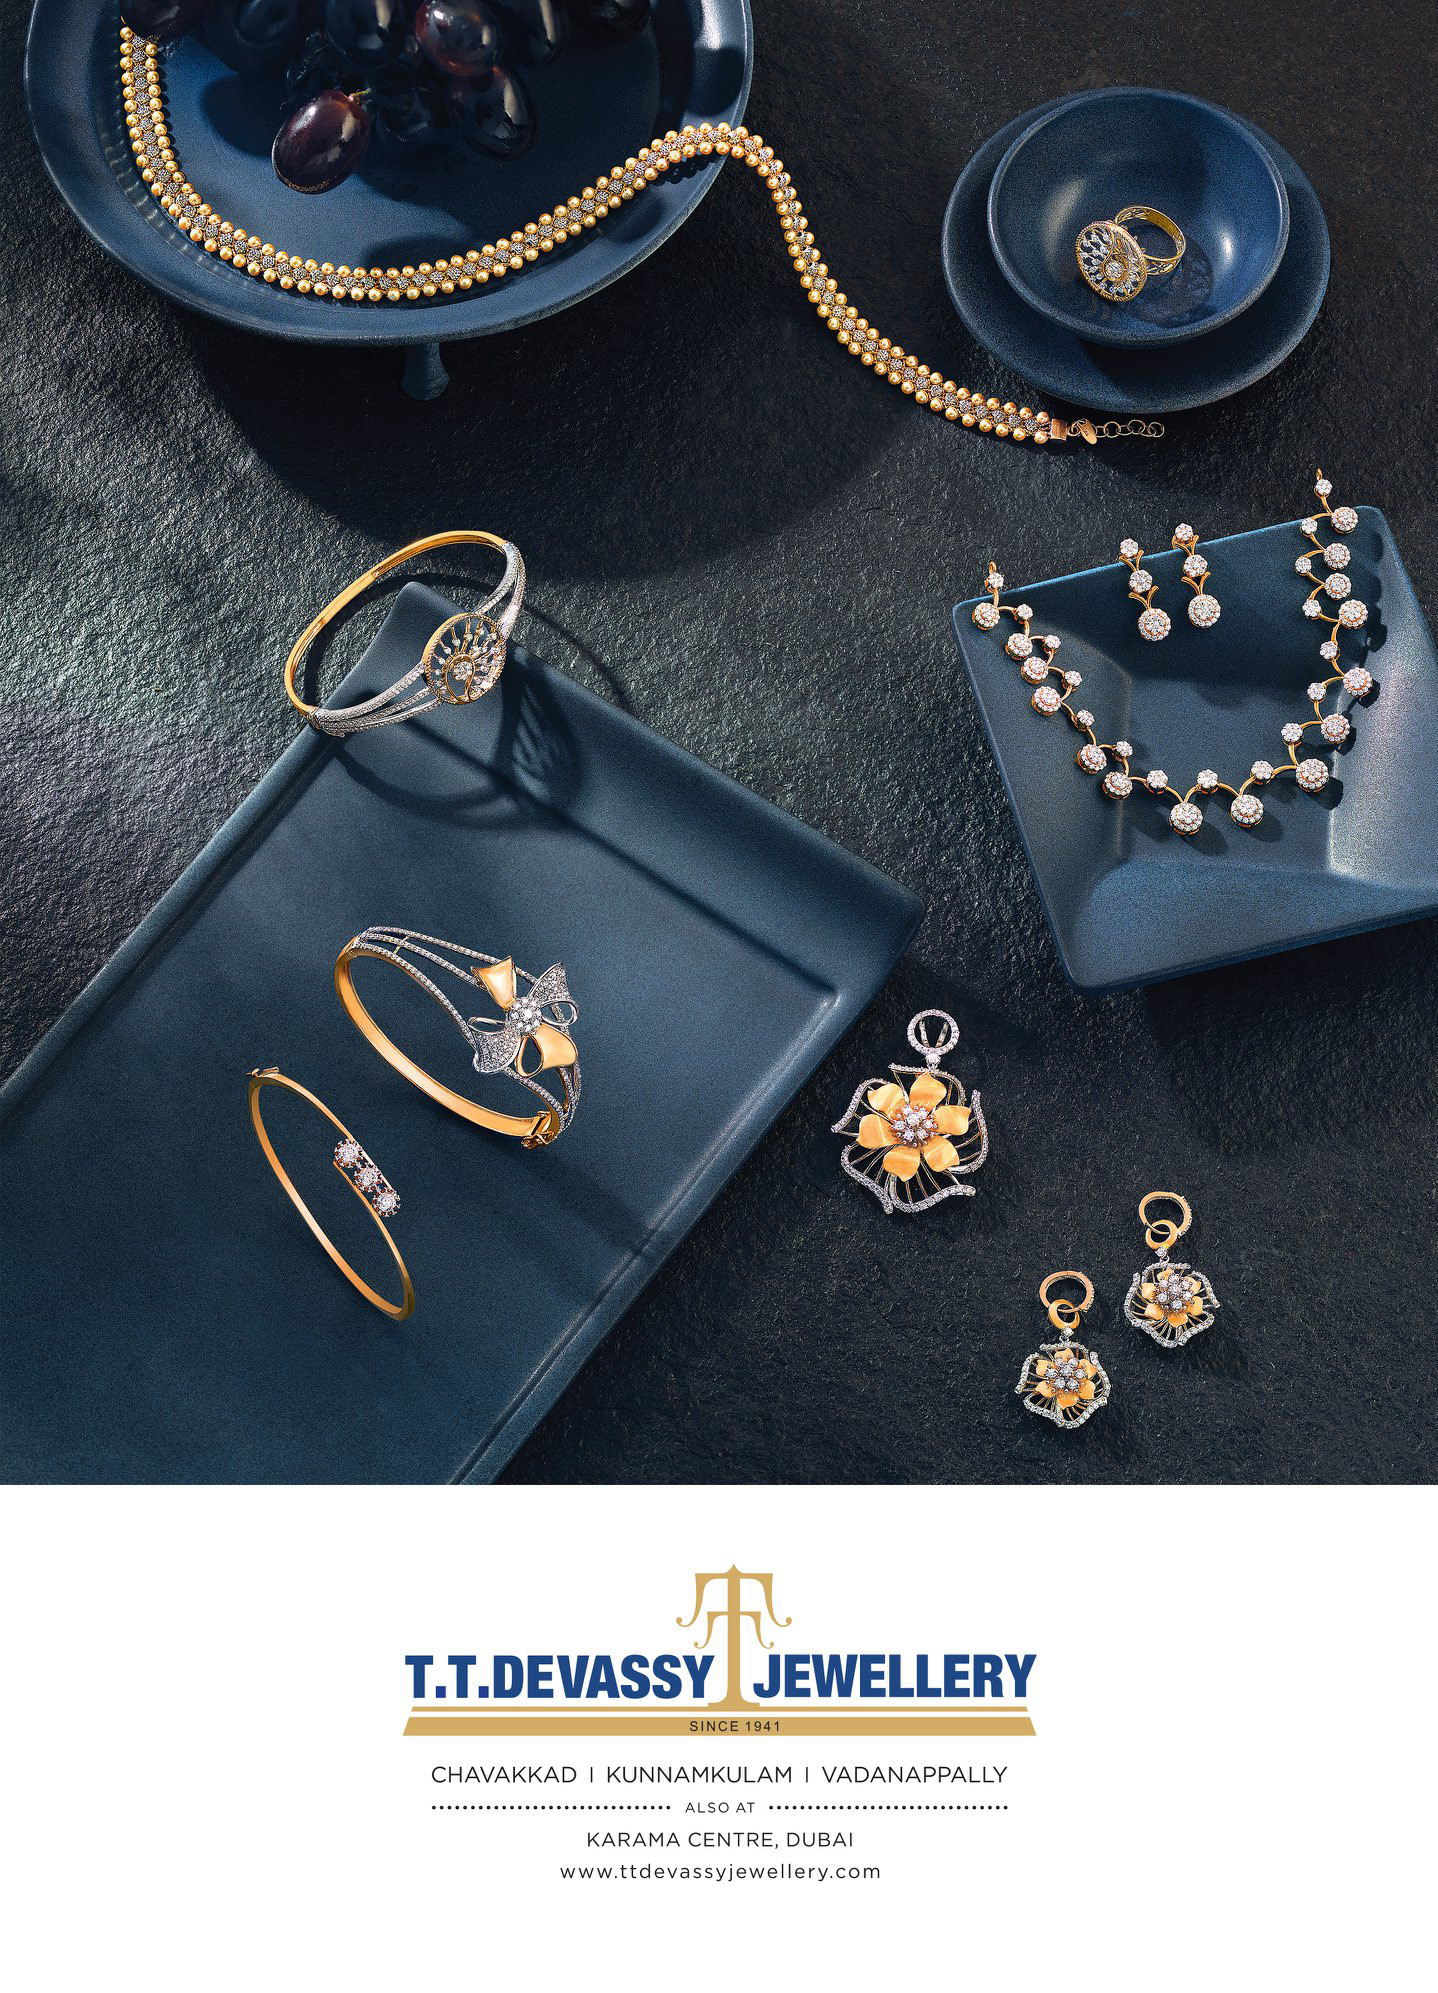 tijo john - TT Devassy Jewellery 2019 campaign